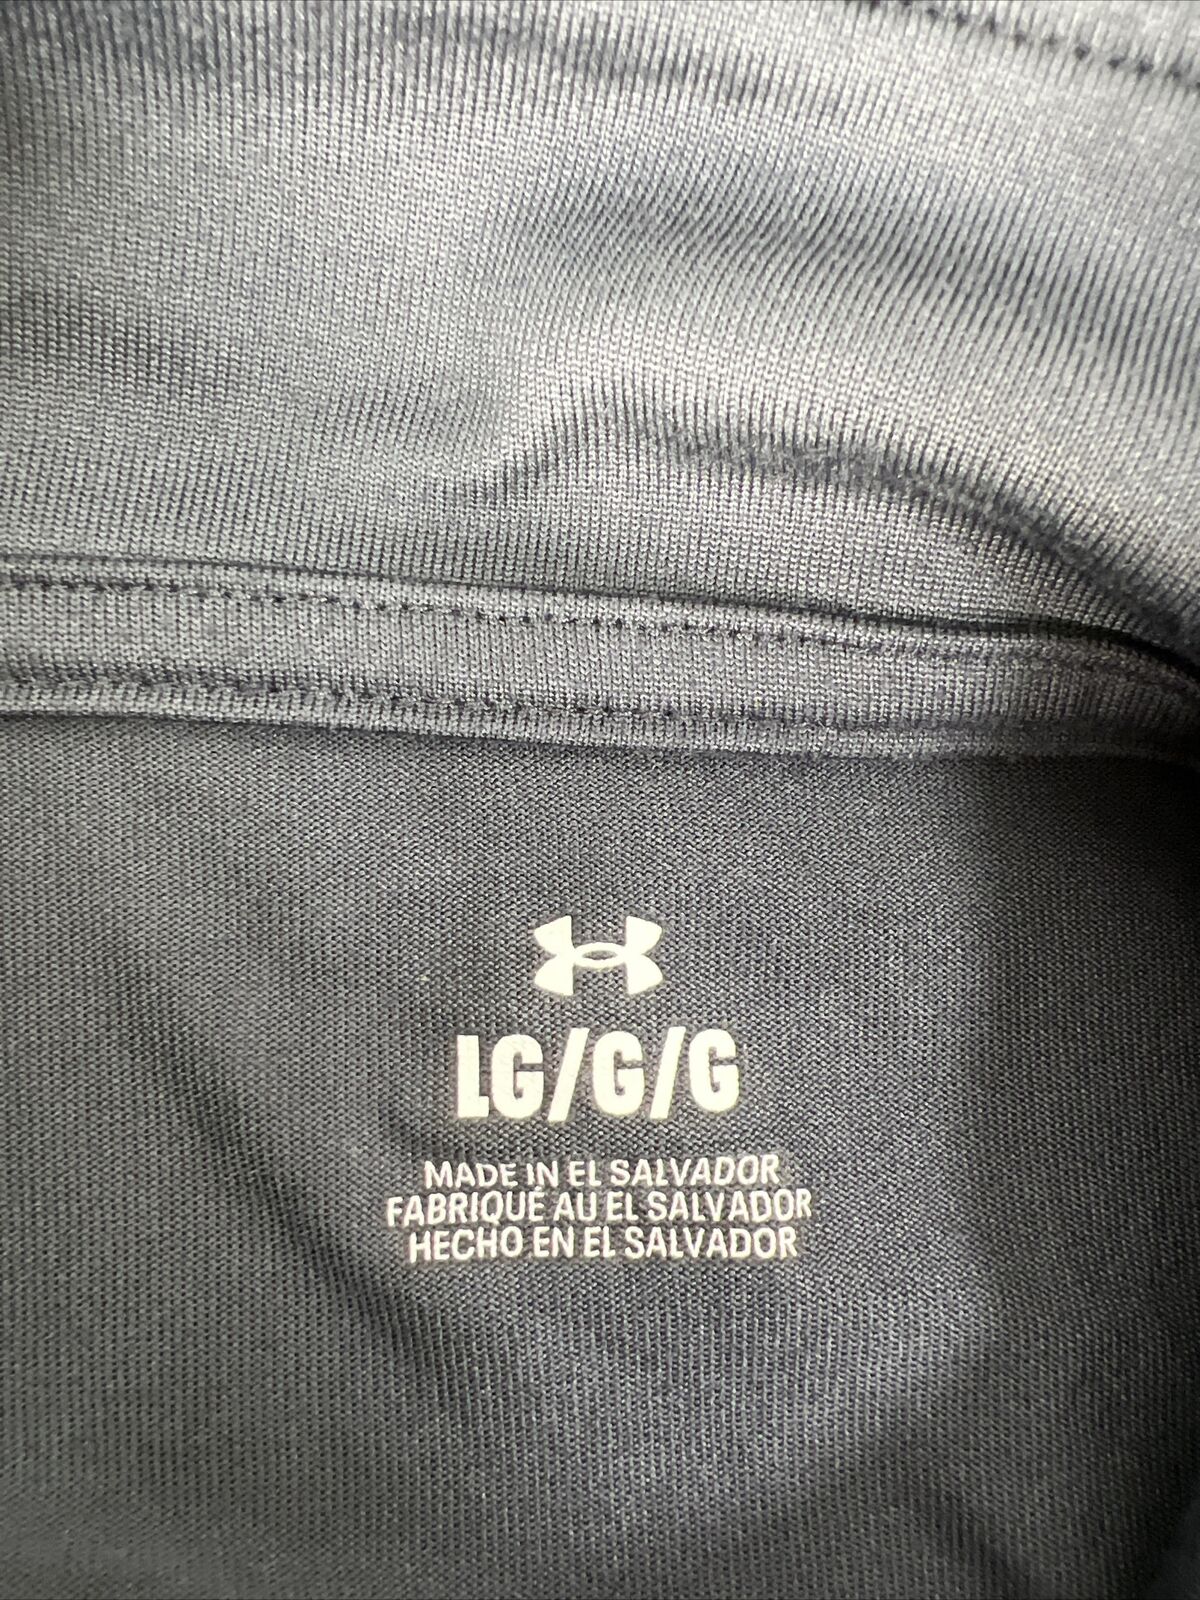 Under Armour Men's Gray Long Sleeve 1/2 Zip Athletic Shirt - L